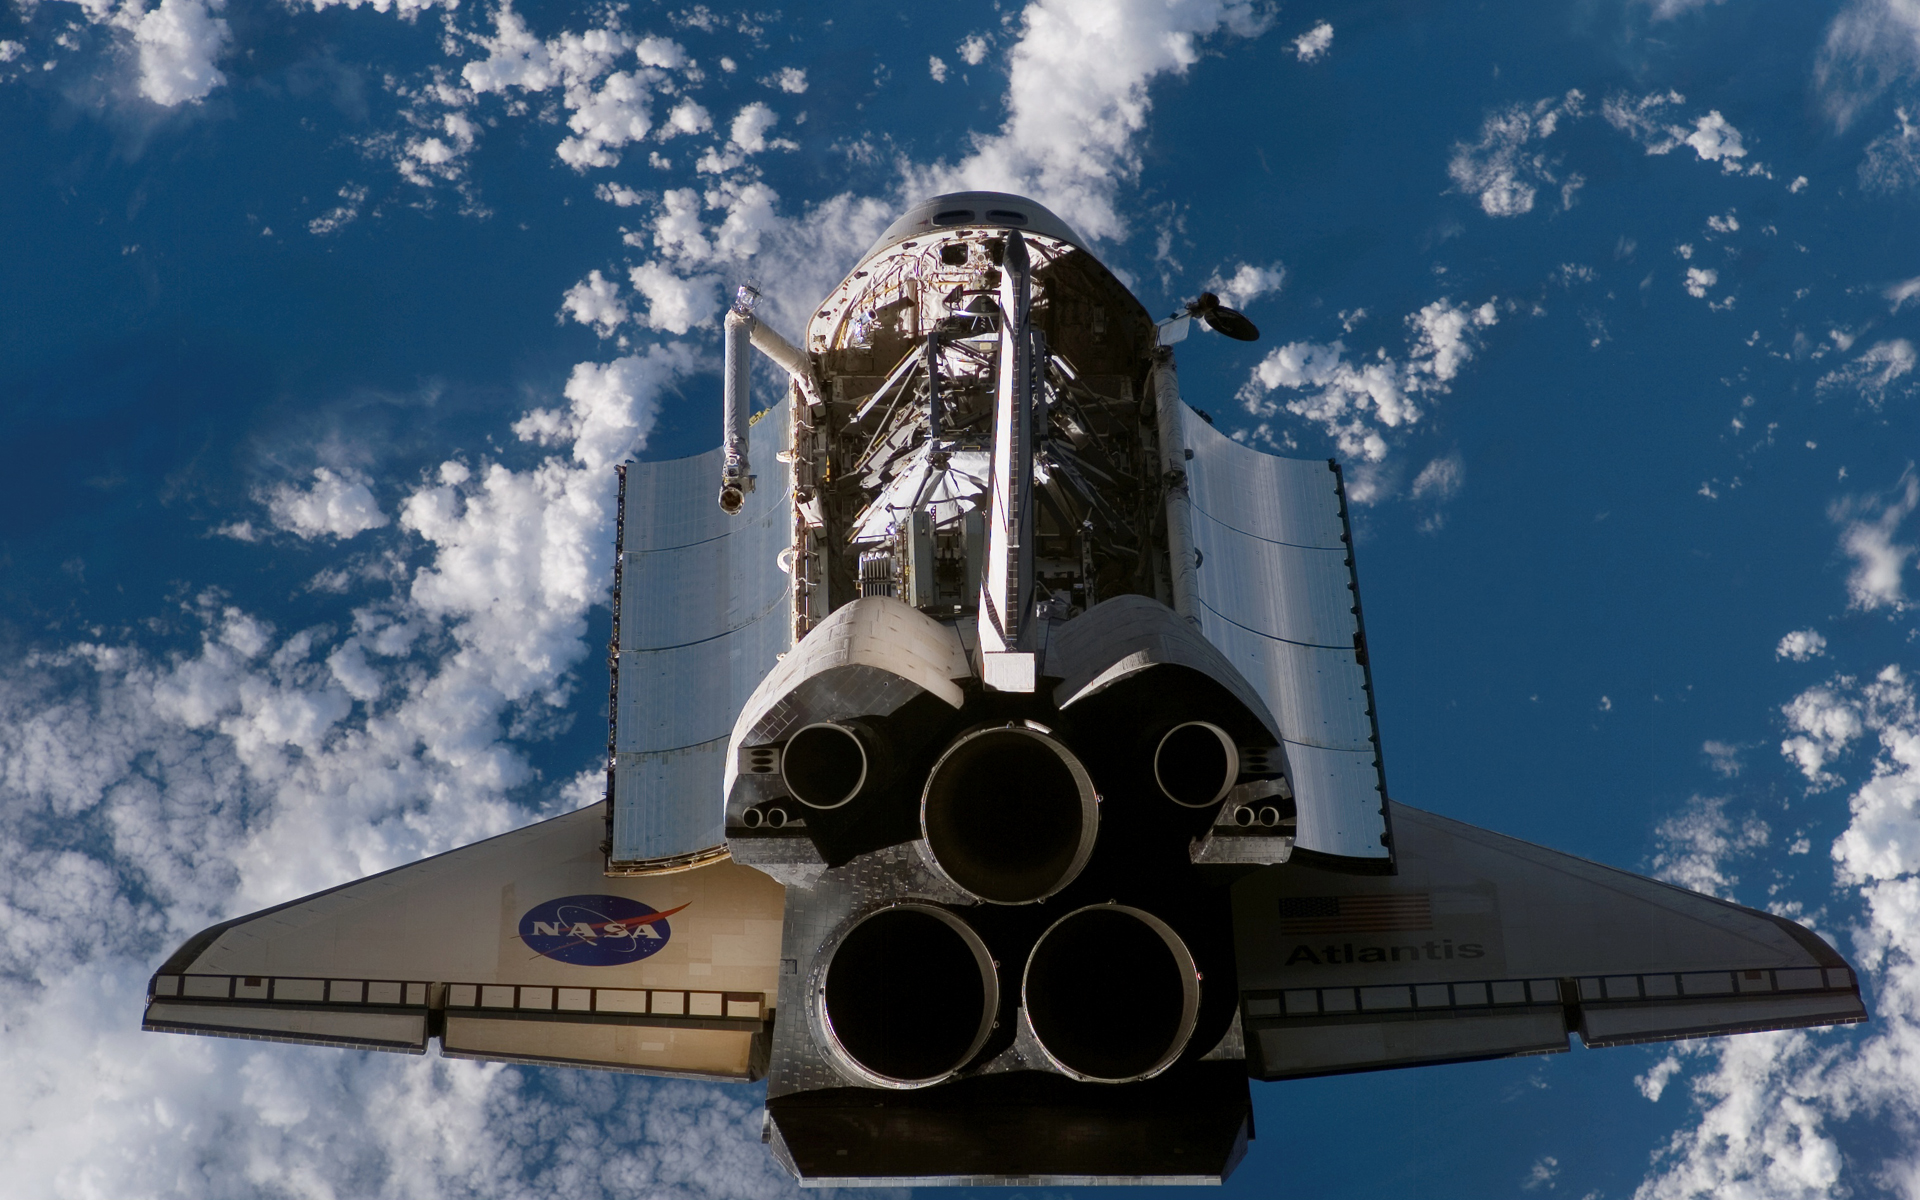 space shuttle atlantis, vehicles, nasa, space shuttle, space shuttles